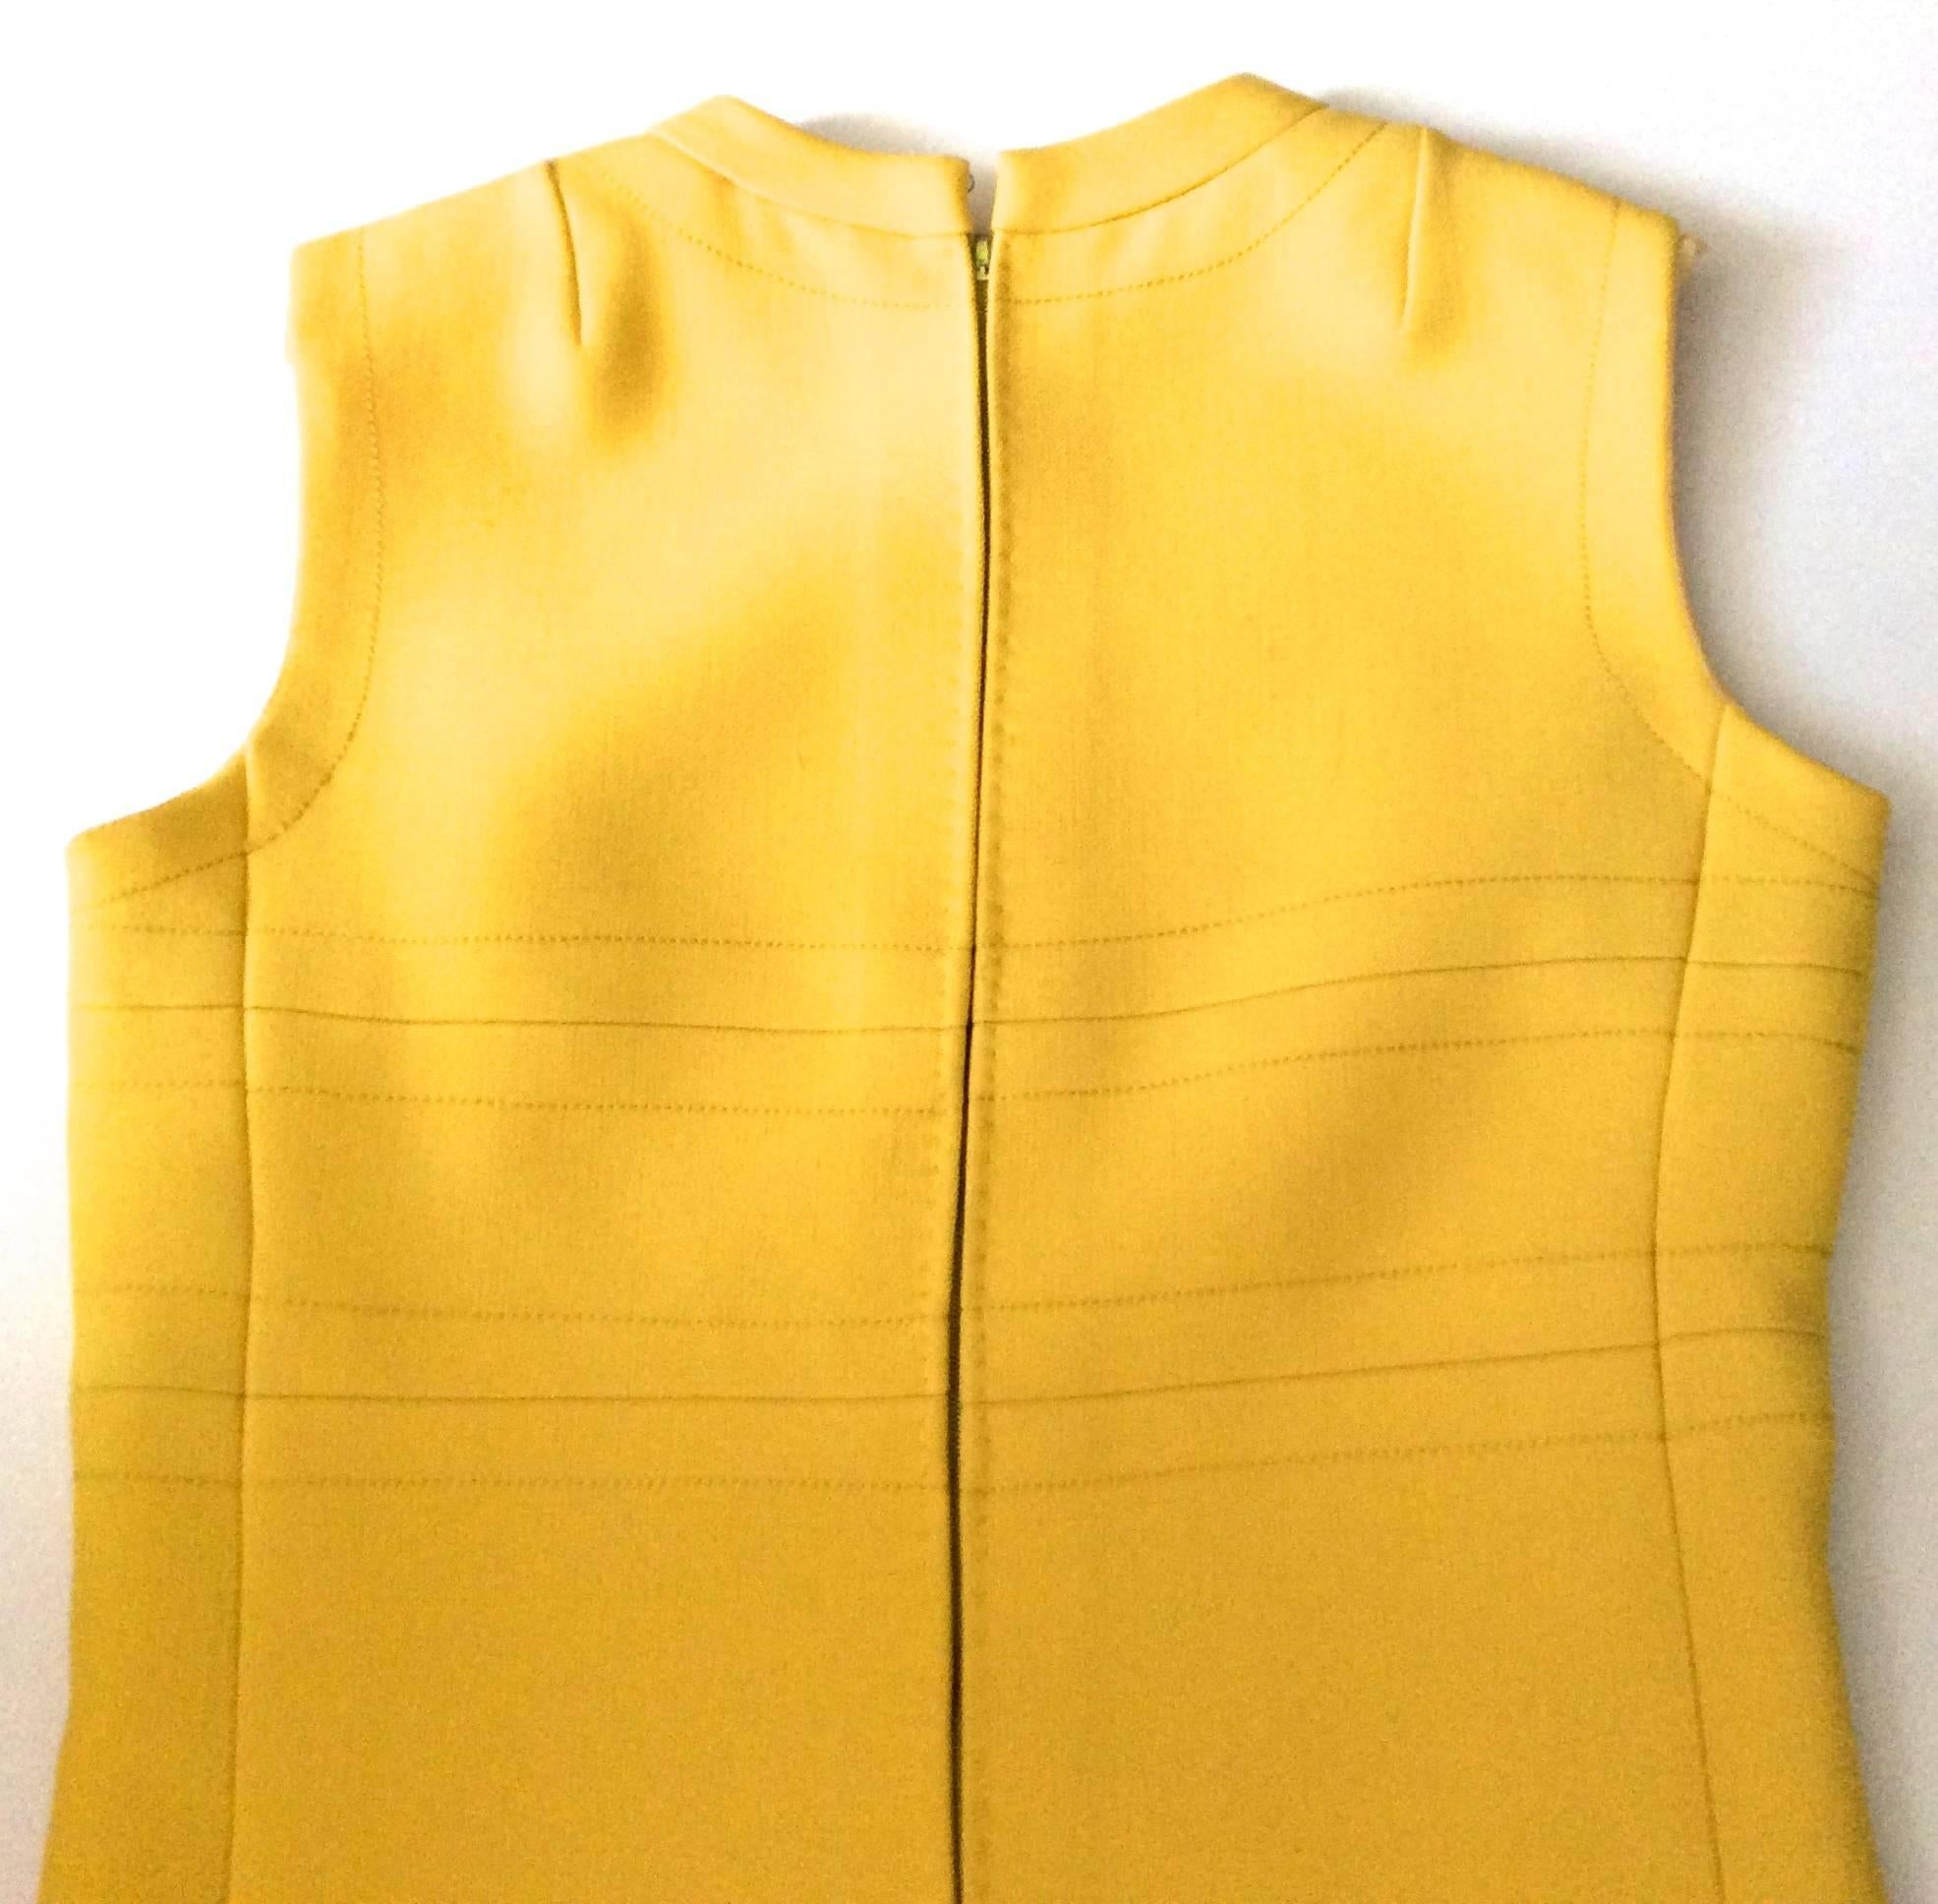 Vintage 1960's Yellow Sleeveless A-Line Dress 1